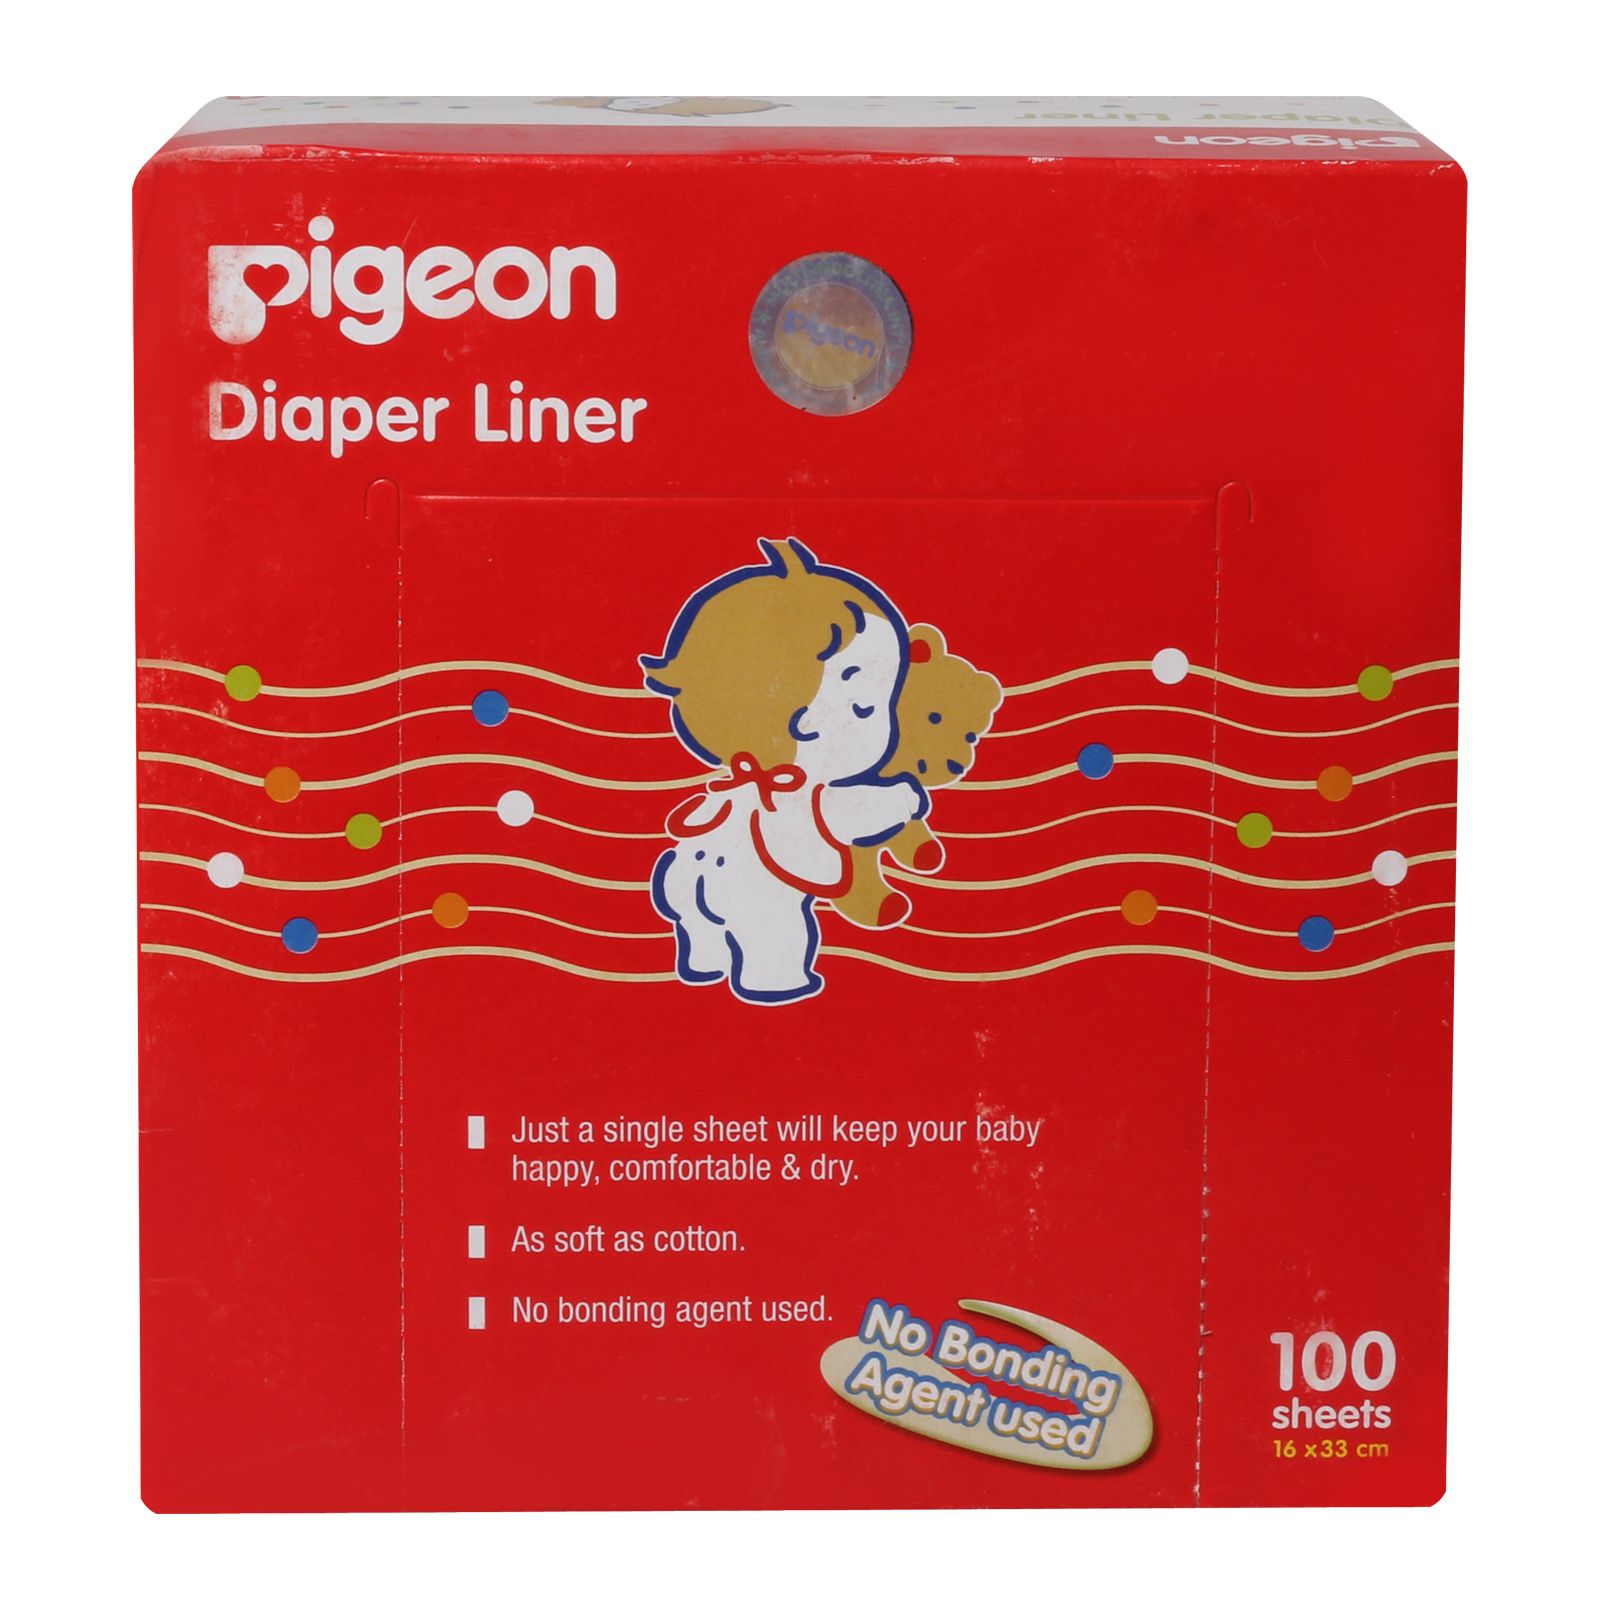 Pigeon - Diaper Liner